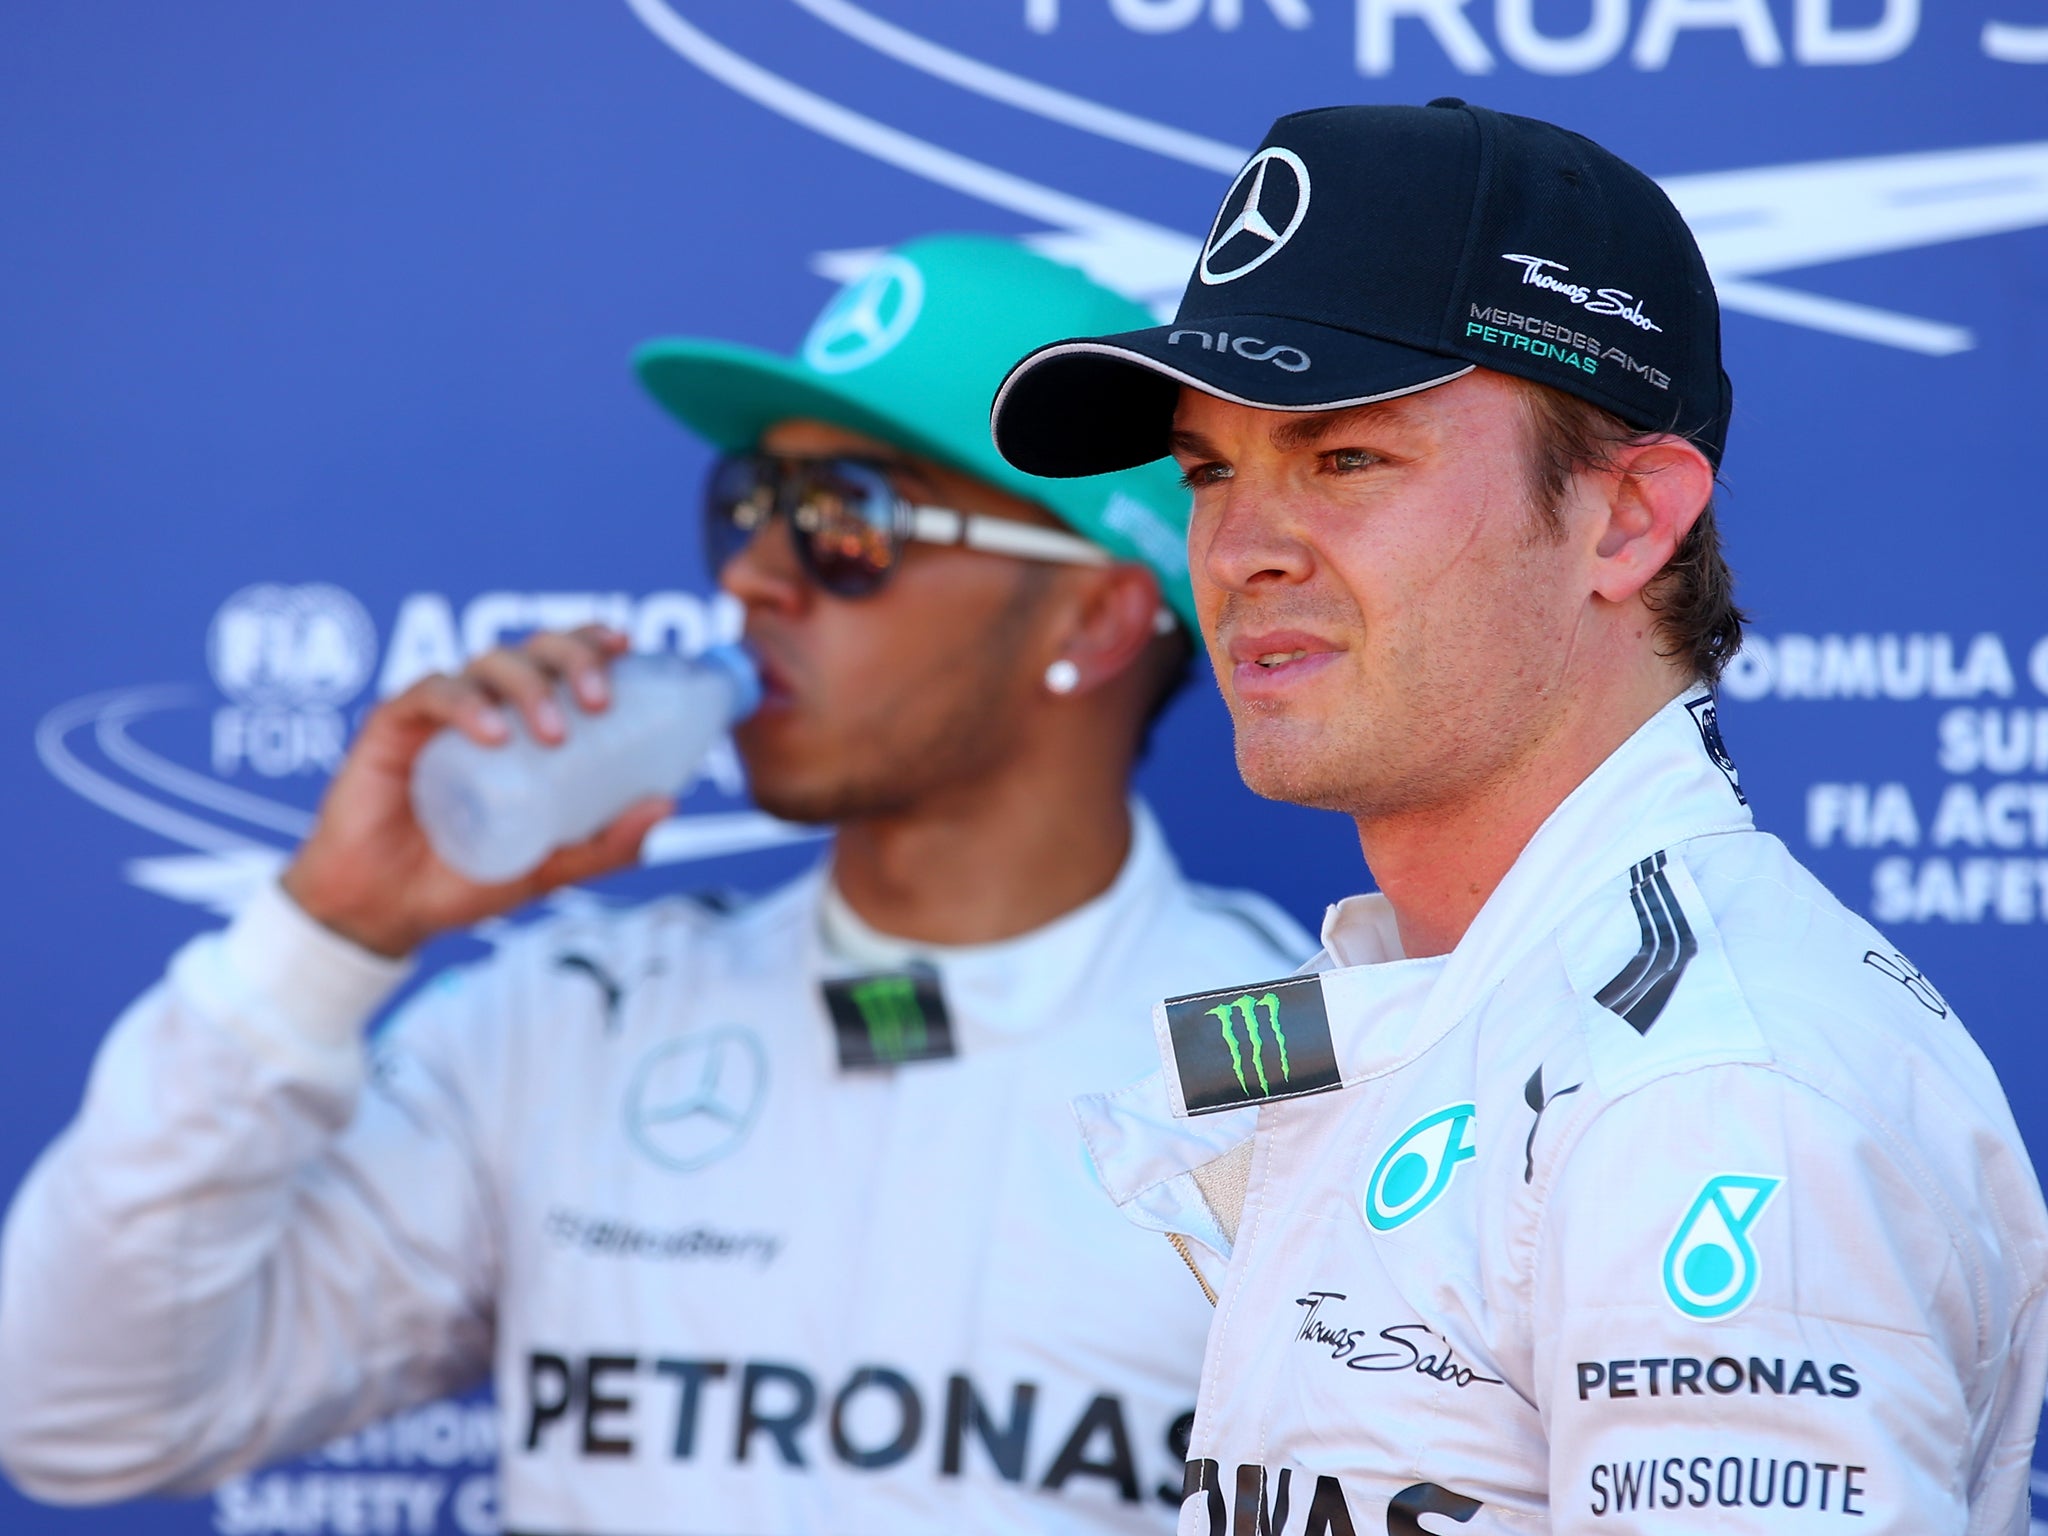 Nico Rosberg and Lewis Hamilton following the Monaco Grand Prix qualifying